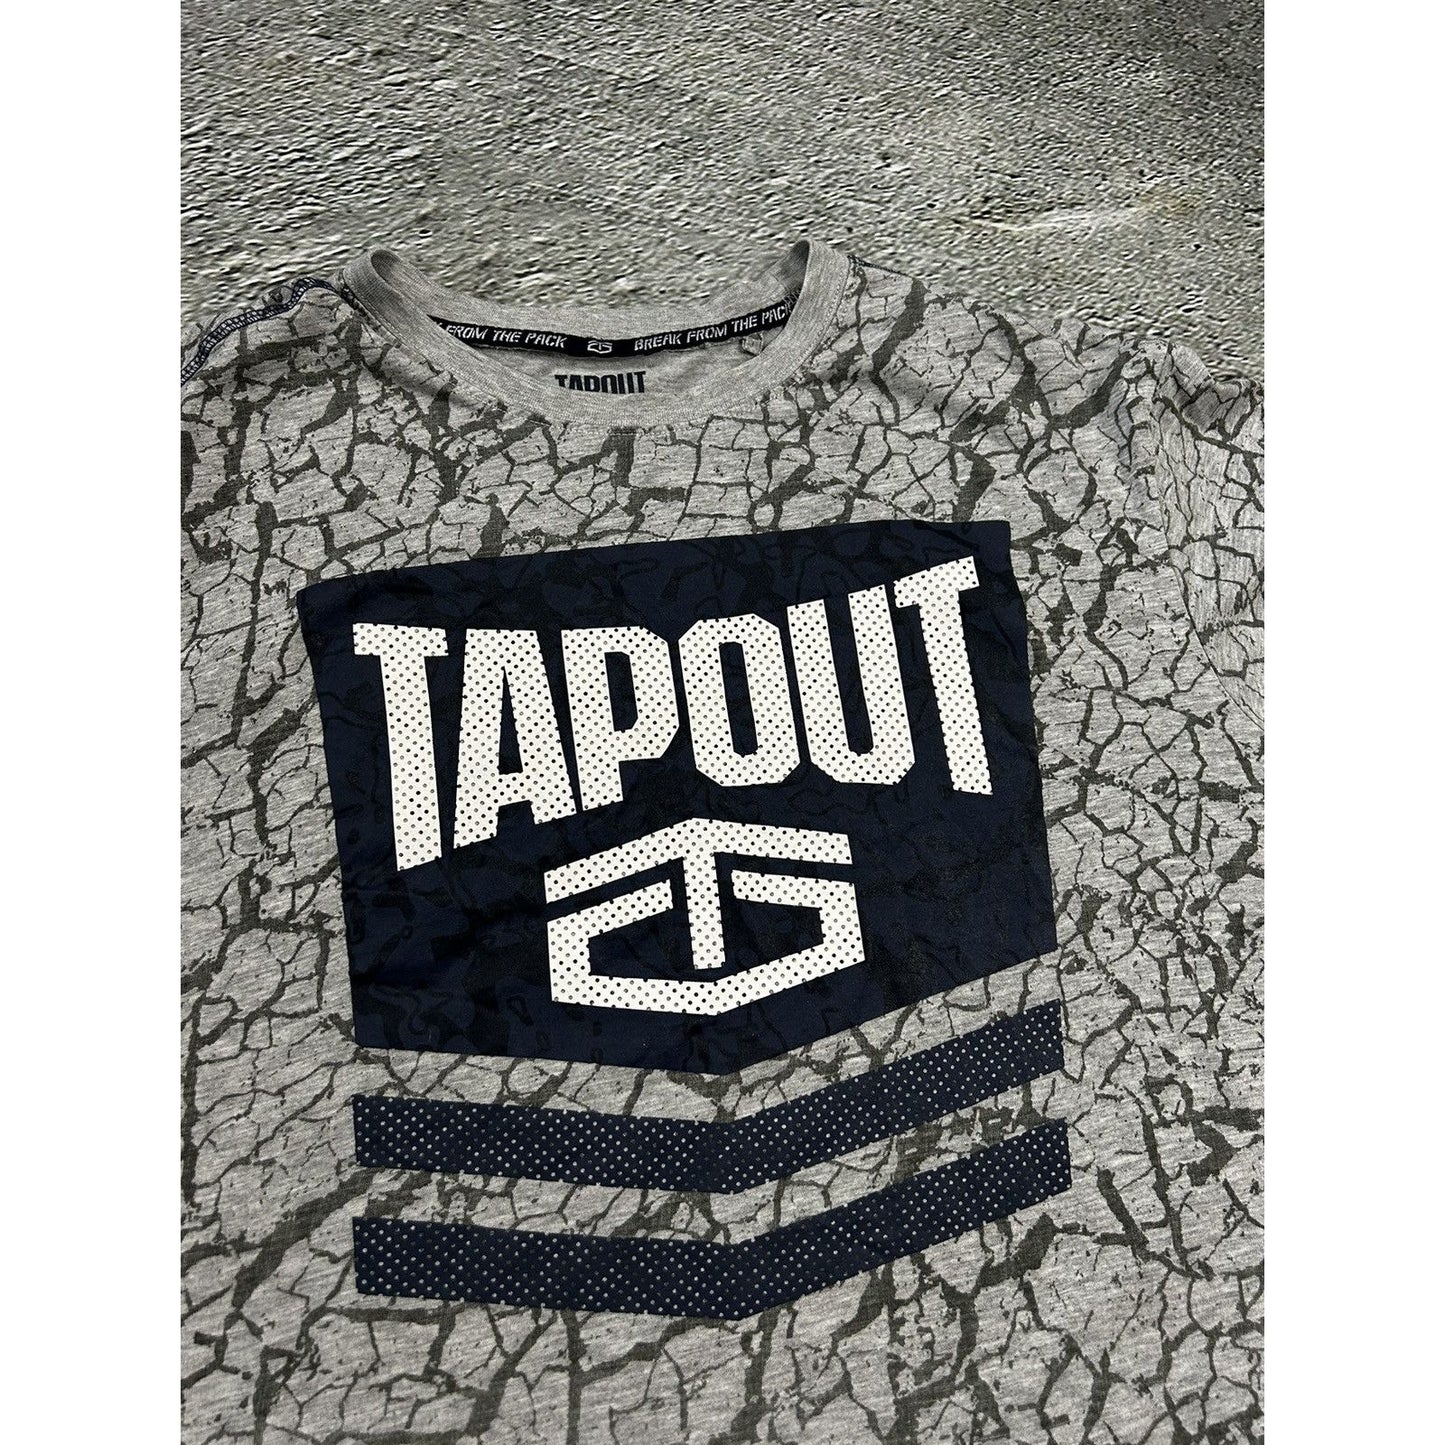 Tapout Vintage Y2K T-shirt big logo grey